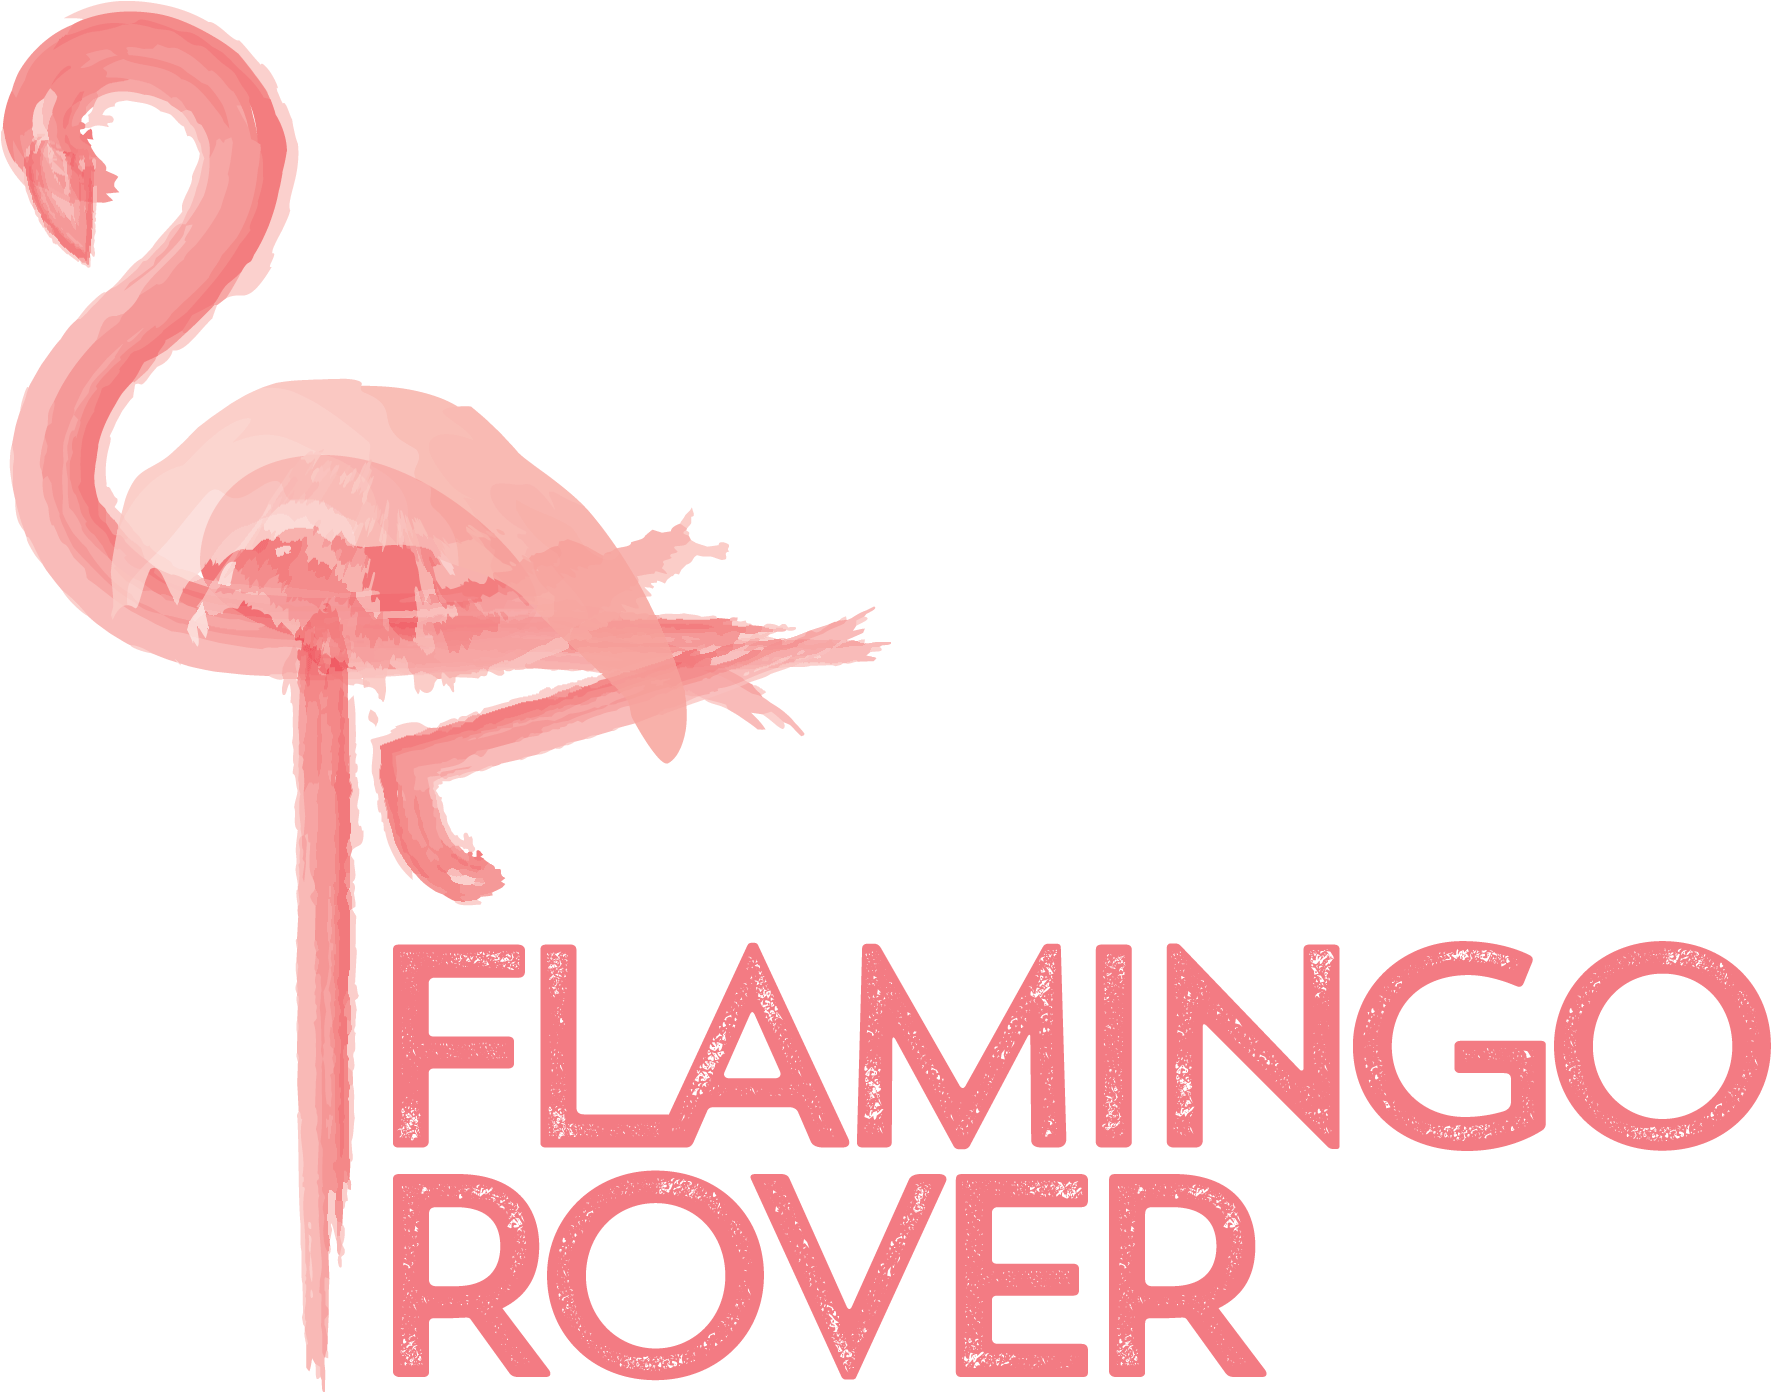 Flamingo Rover Logo - Origami Tear-off Pad (1919x1391)